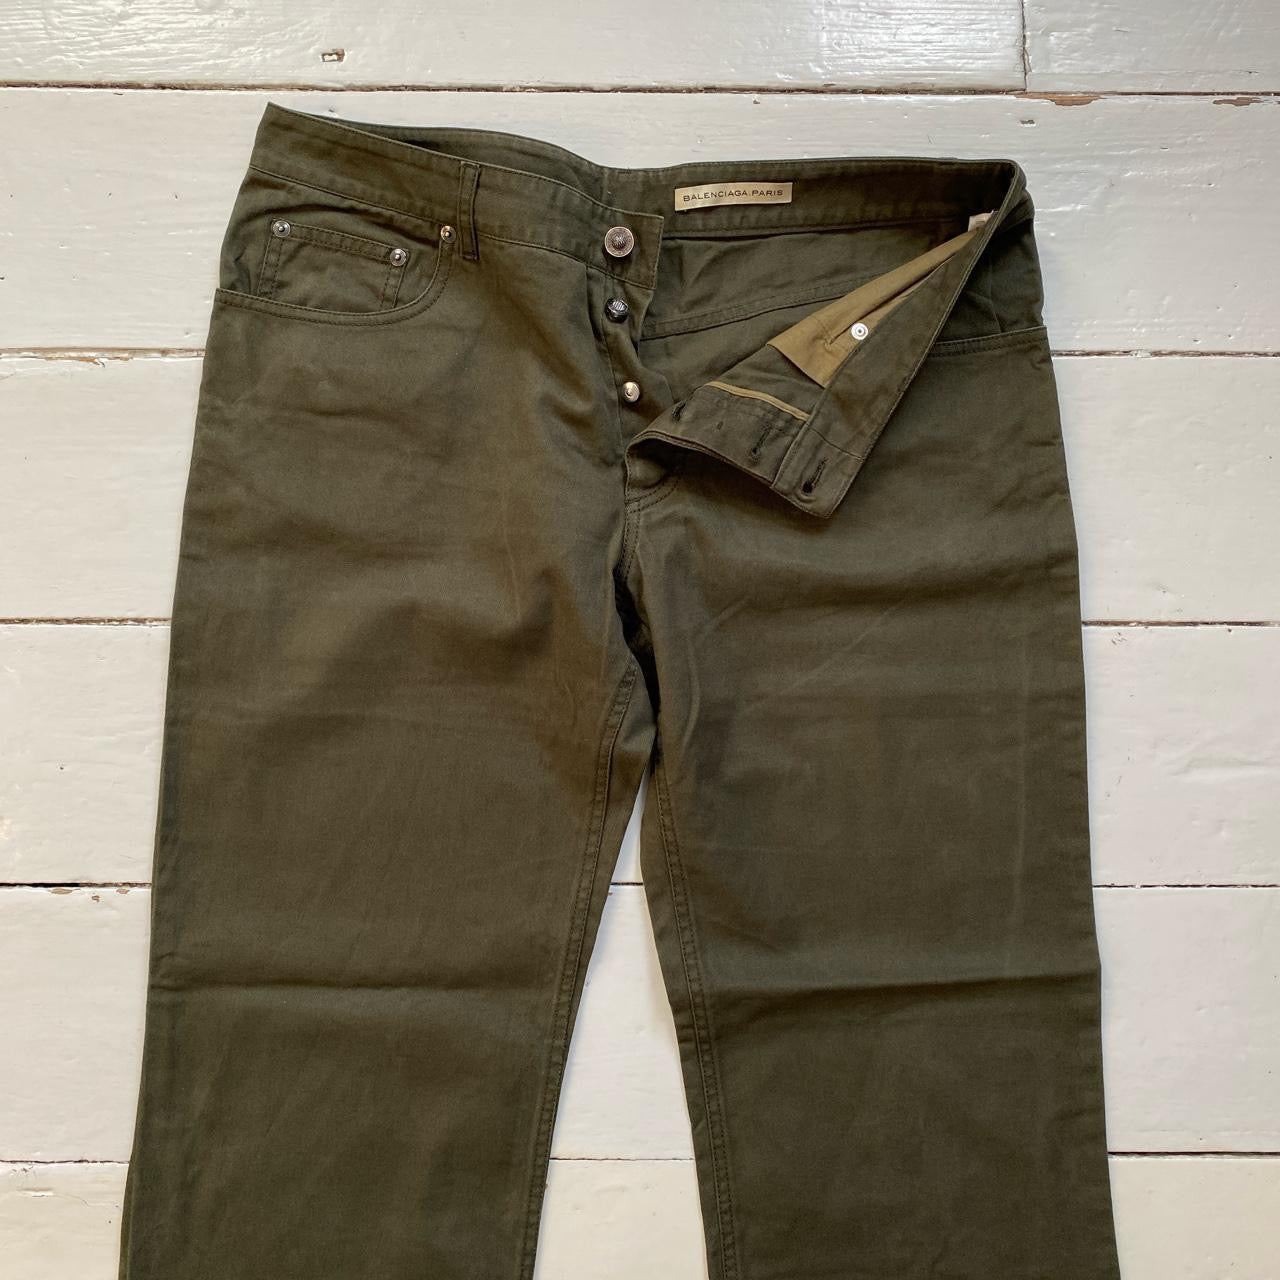 Balenciaga Olive Jeans (34W28L)